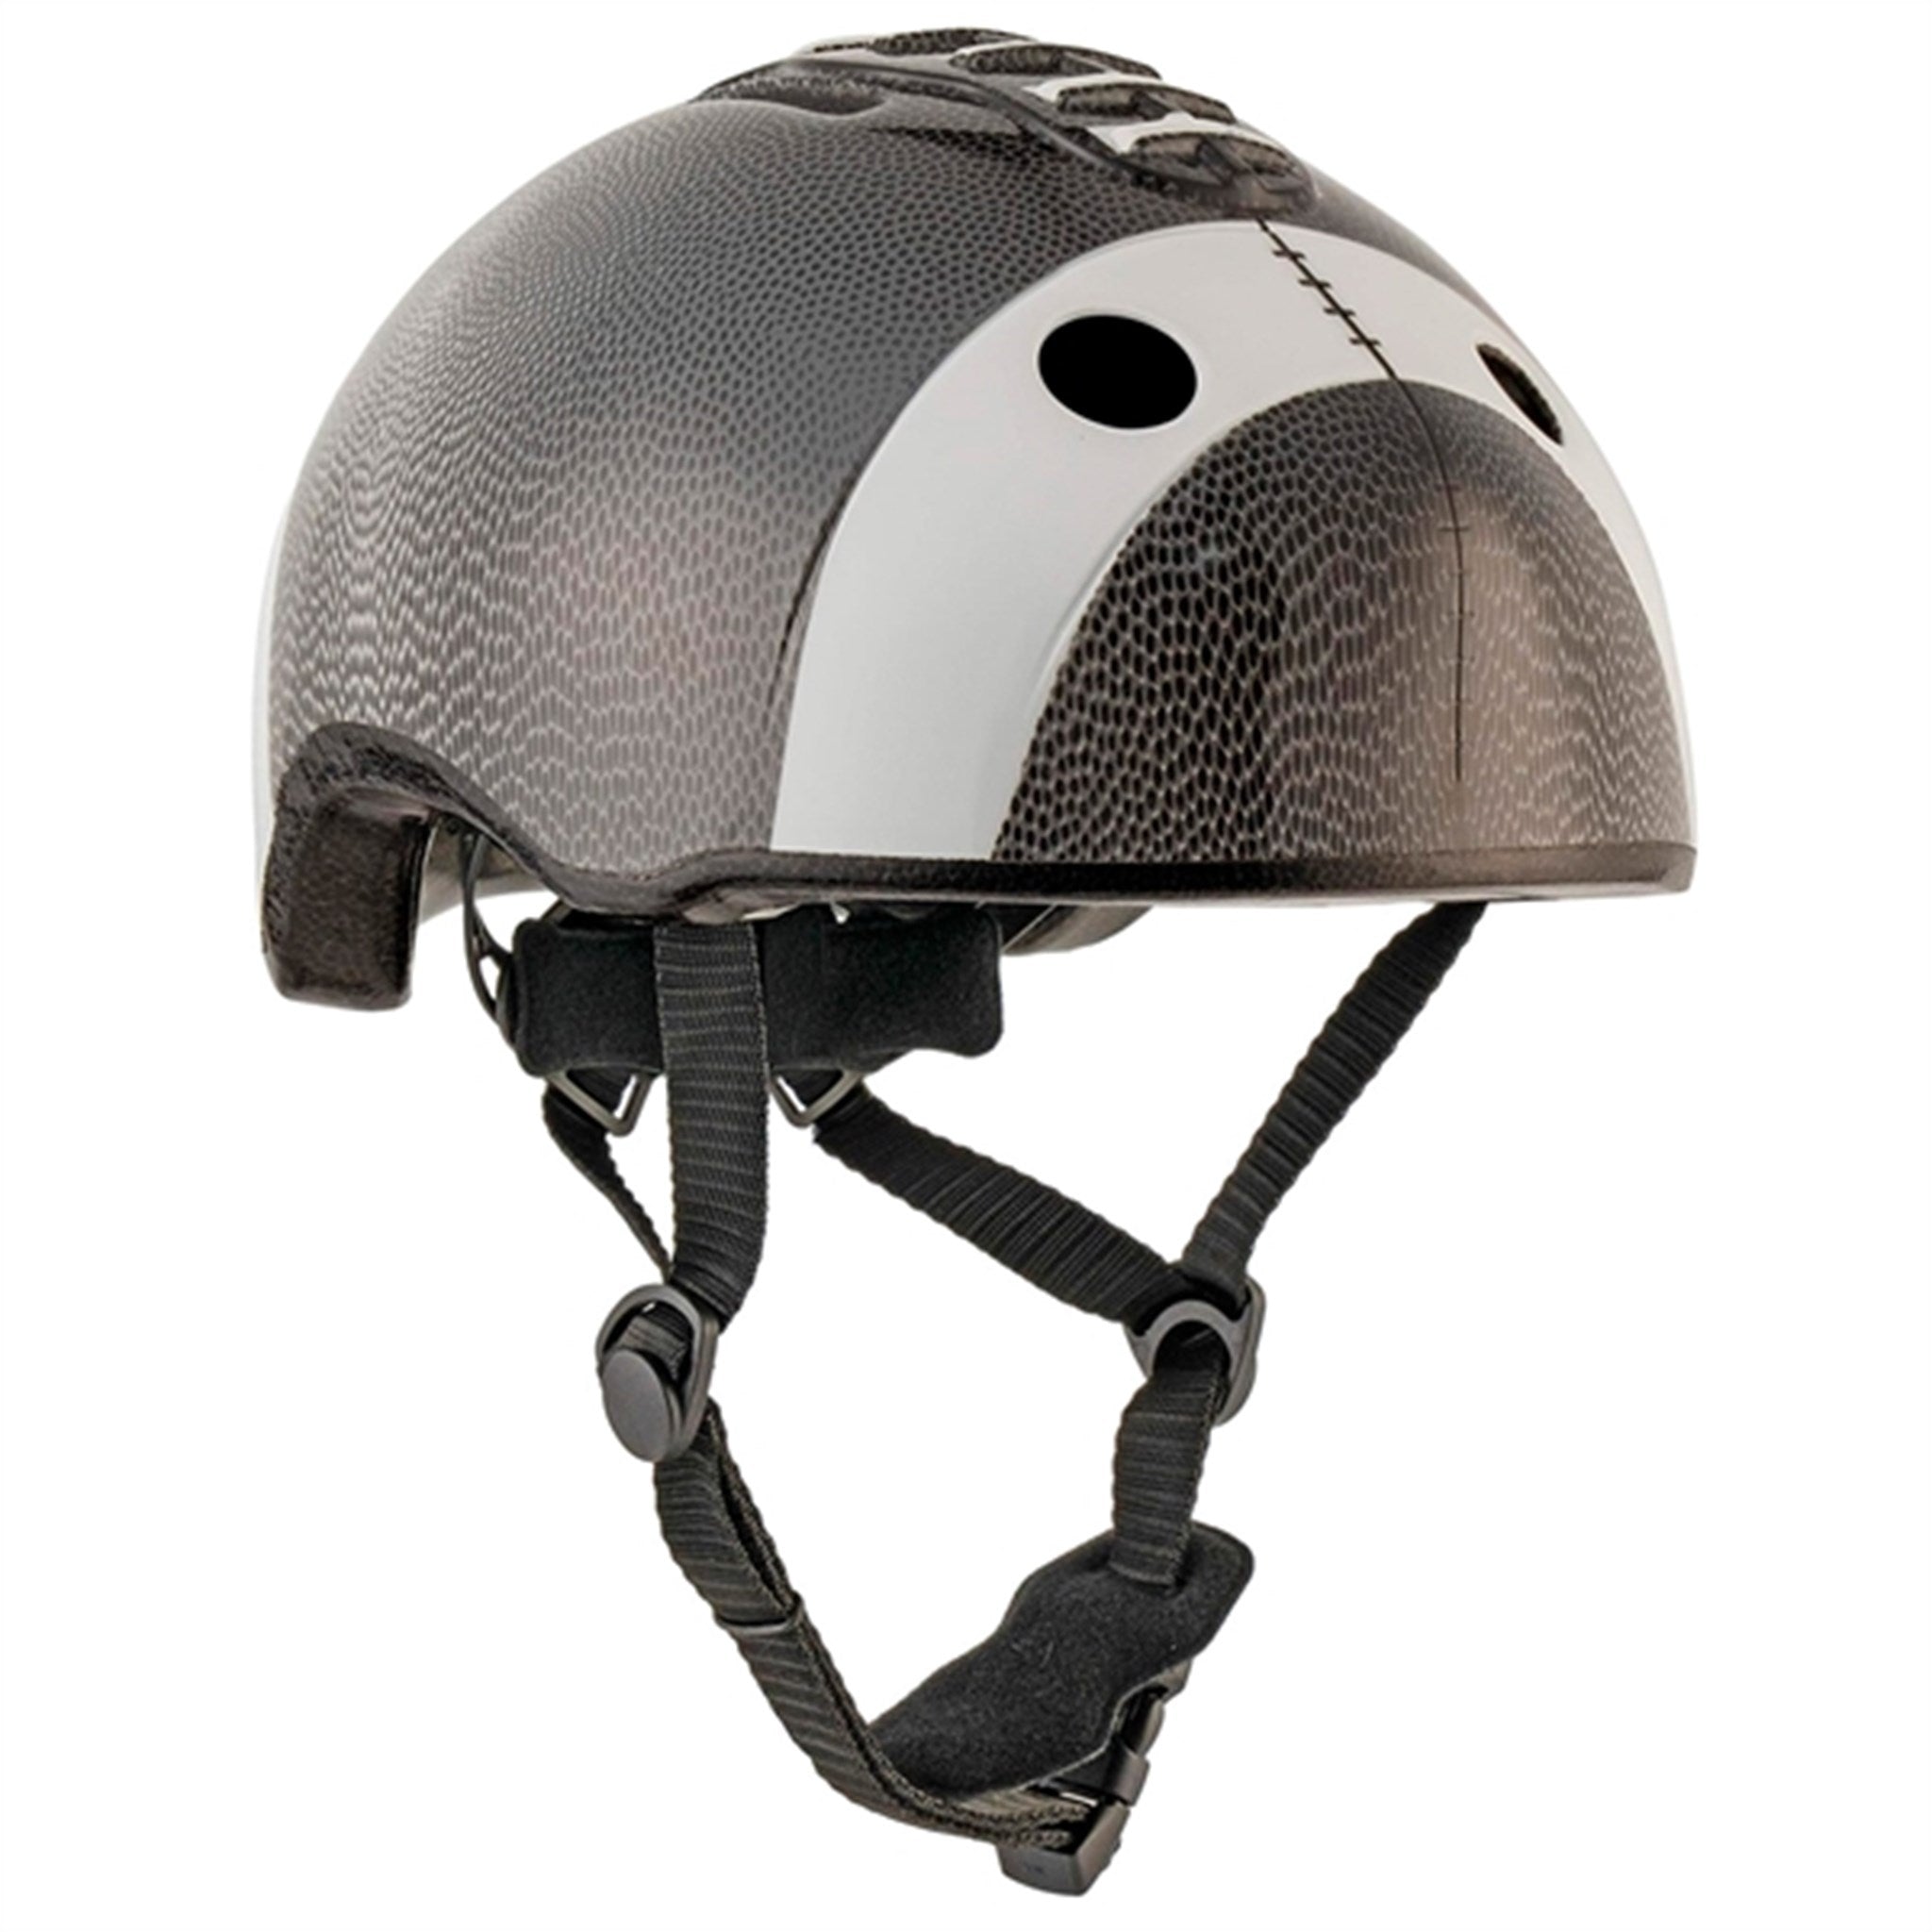 Crazy Safety Football Bicycle Helmet Black